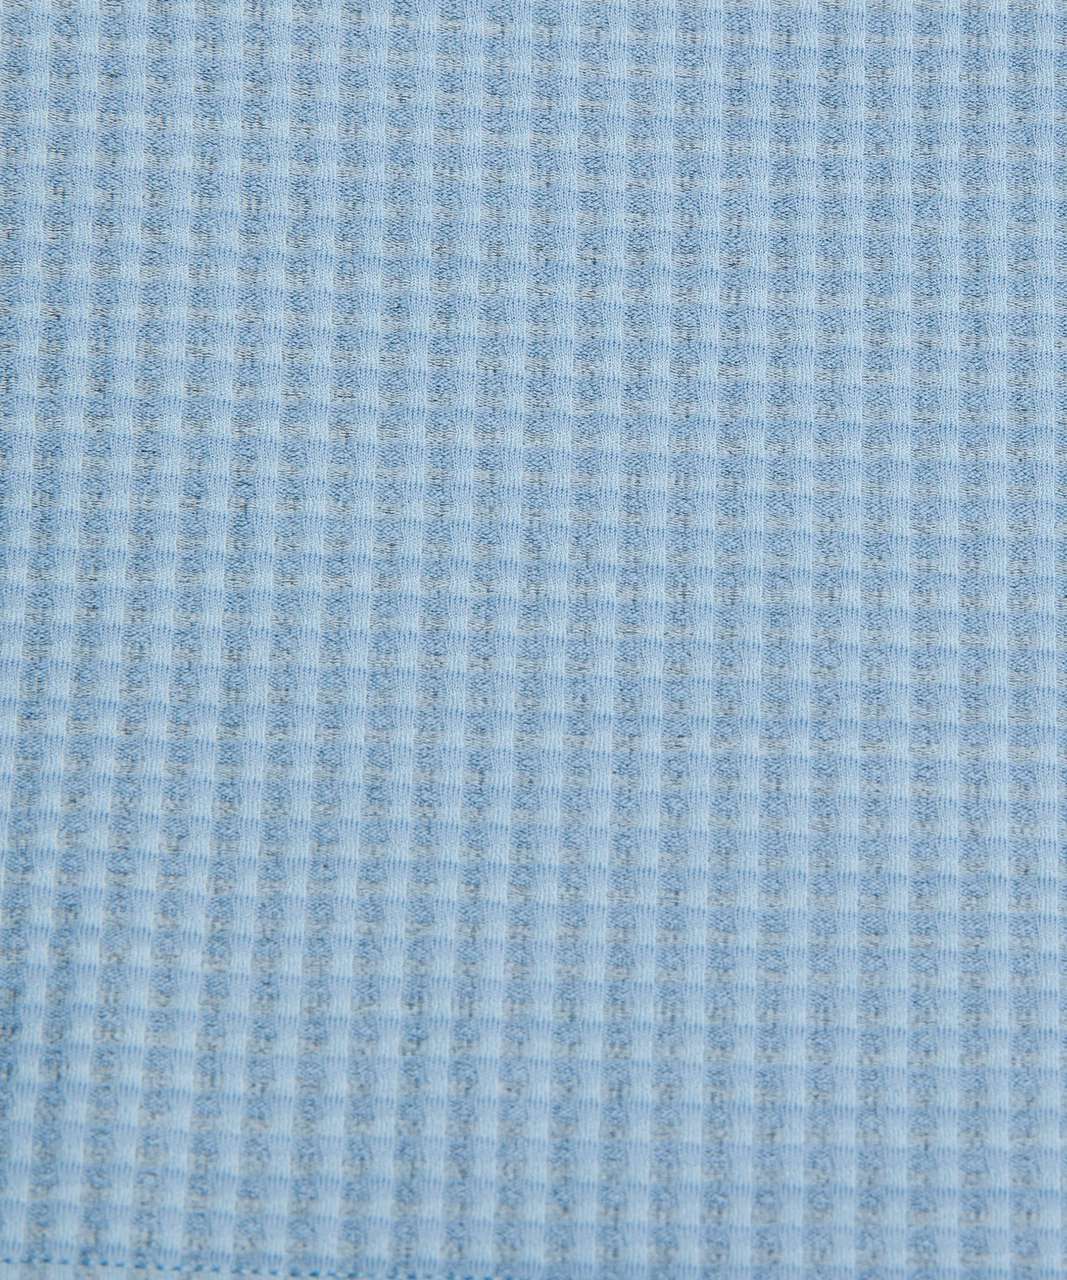 Larallel texture sheer blue lululemon｜TikTok Search